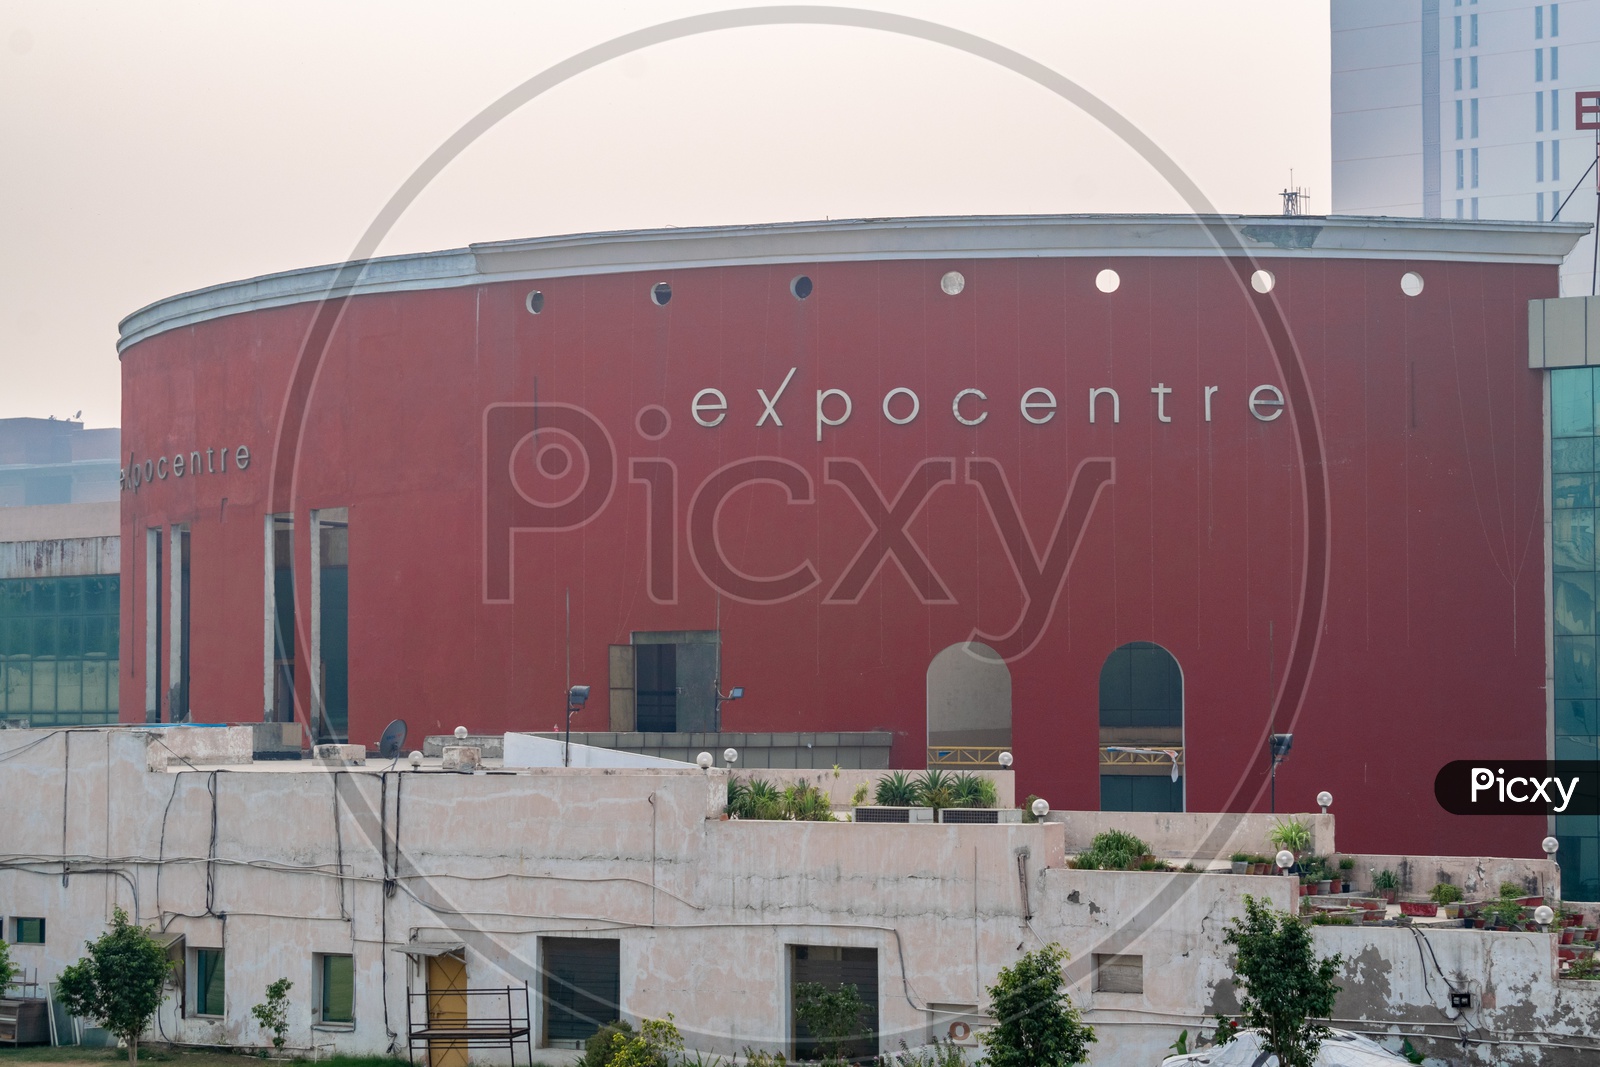 International Trade Expo centre Building in Noida Electronic city